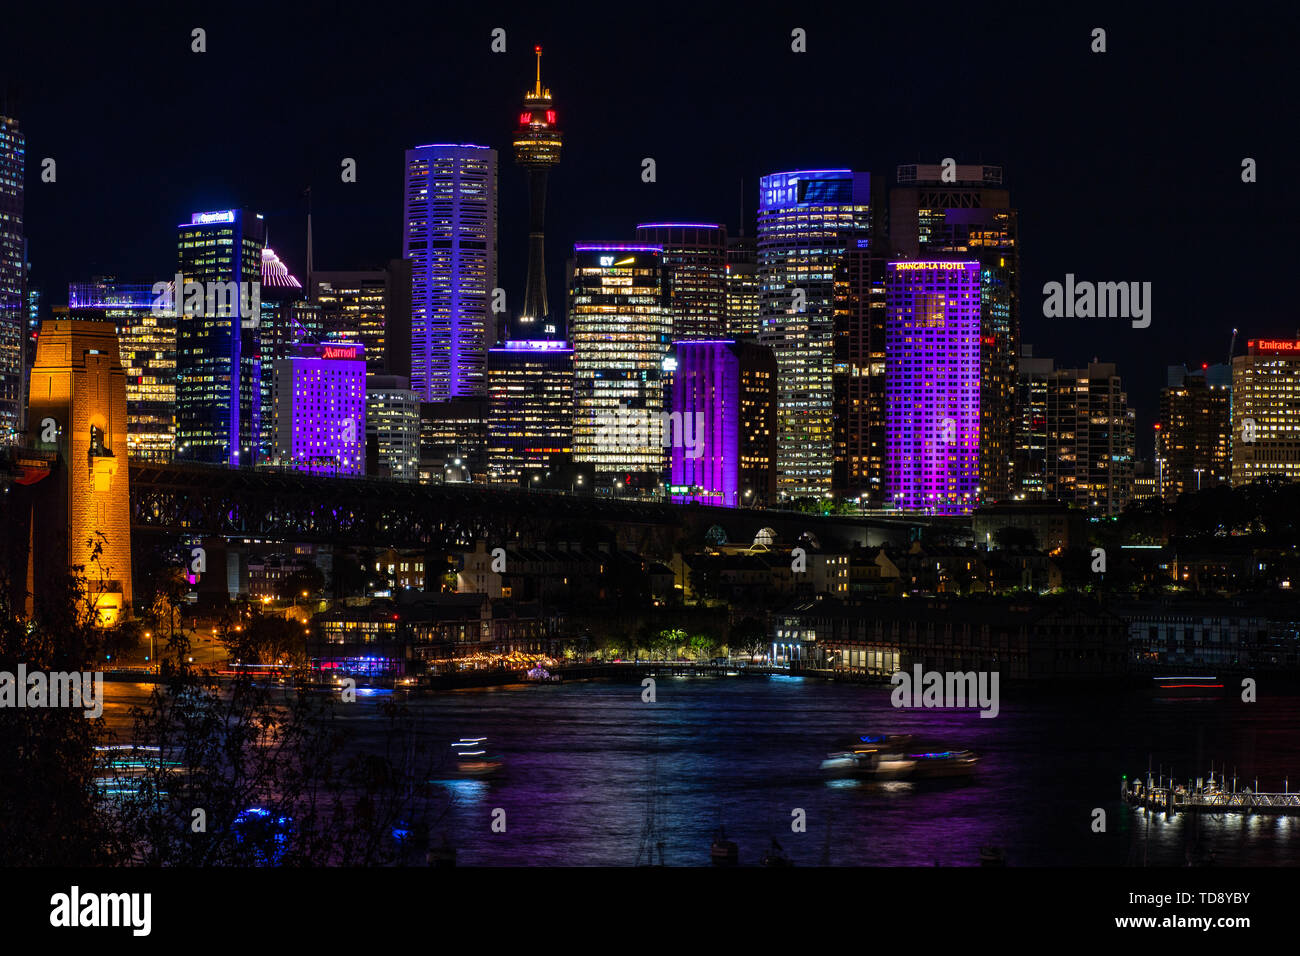 The Sydney Harbour at night during the popular light festival Vivid. Sydney, Australia. Stock Photo